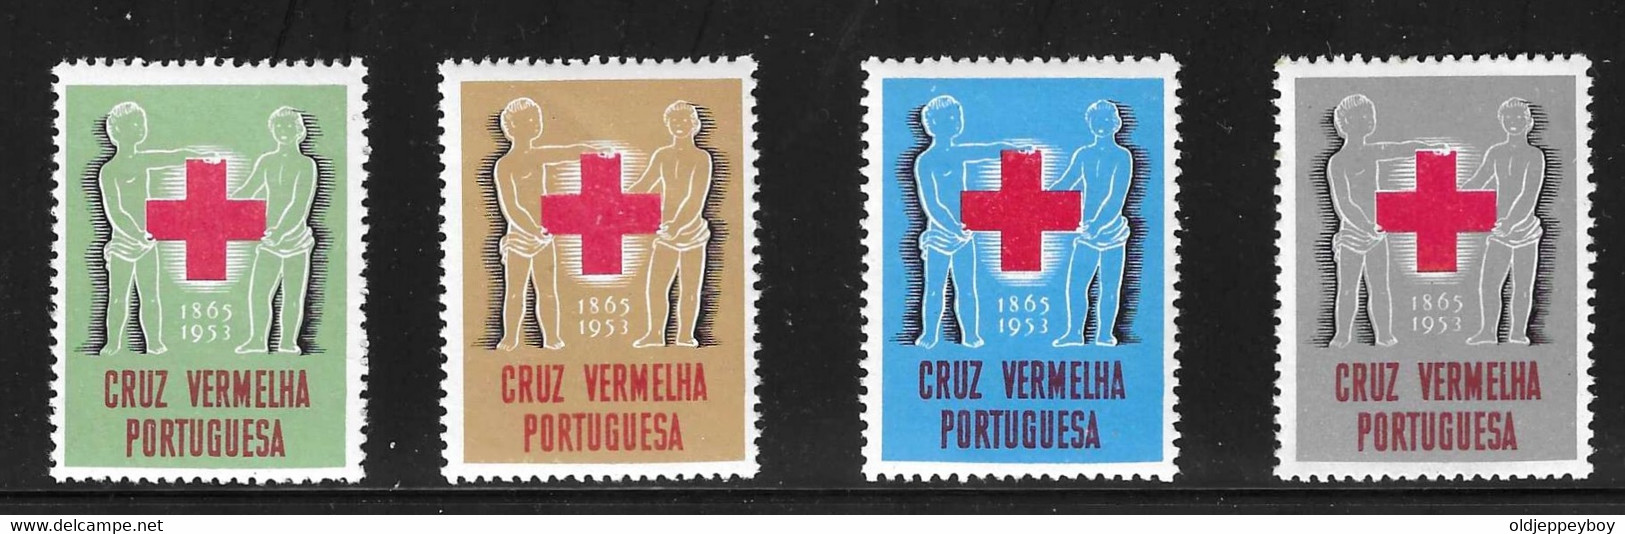 1953 PORTUGAL VIGNETTE RED CROSS CROIX ROUGE TIPO "ENFERMEIRA E ENFERMO" CRUZ VERMELHA PORTUGUESA MINT - Croce Rossa